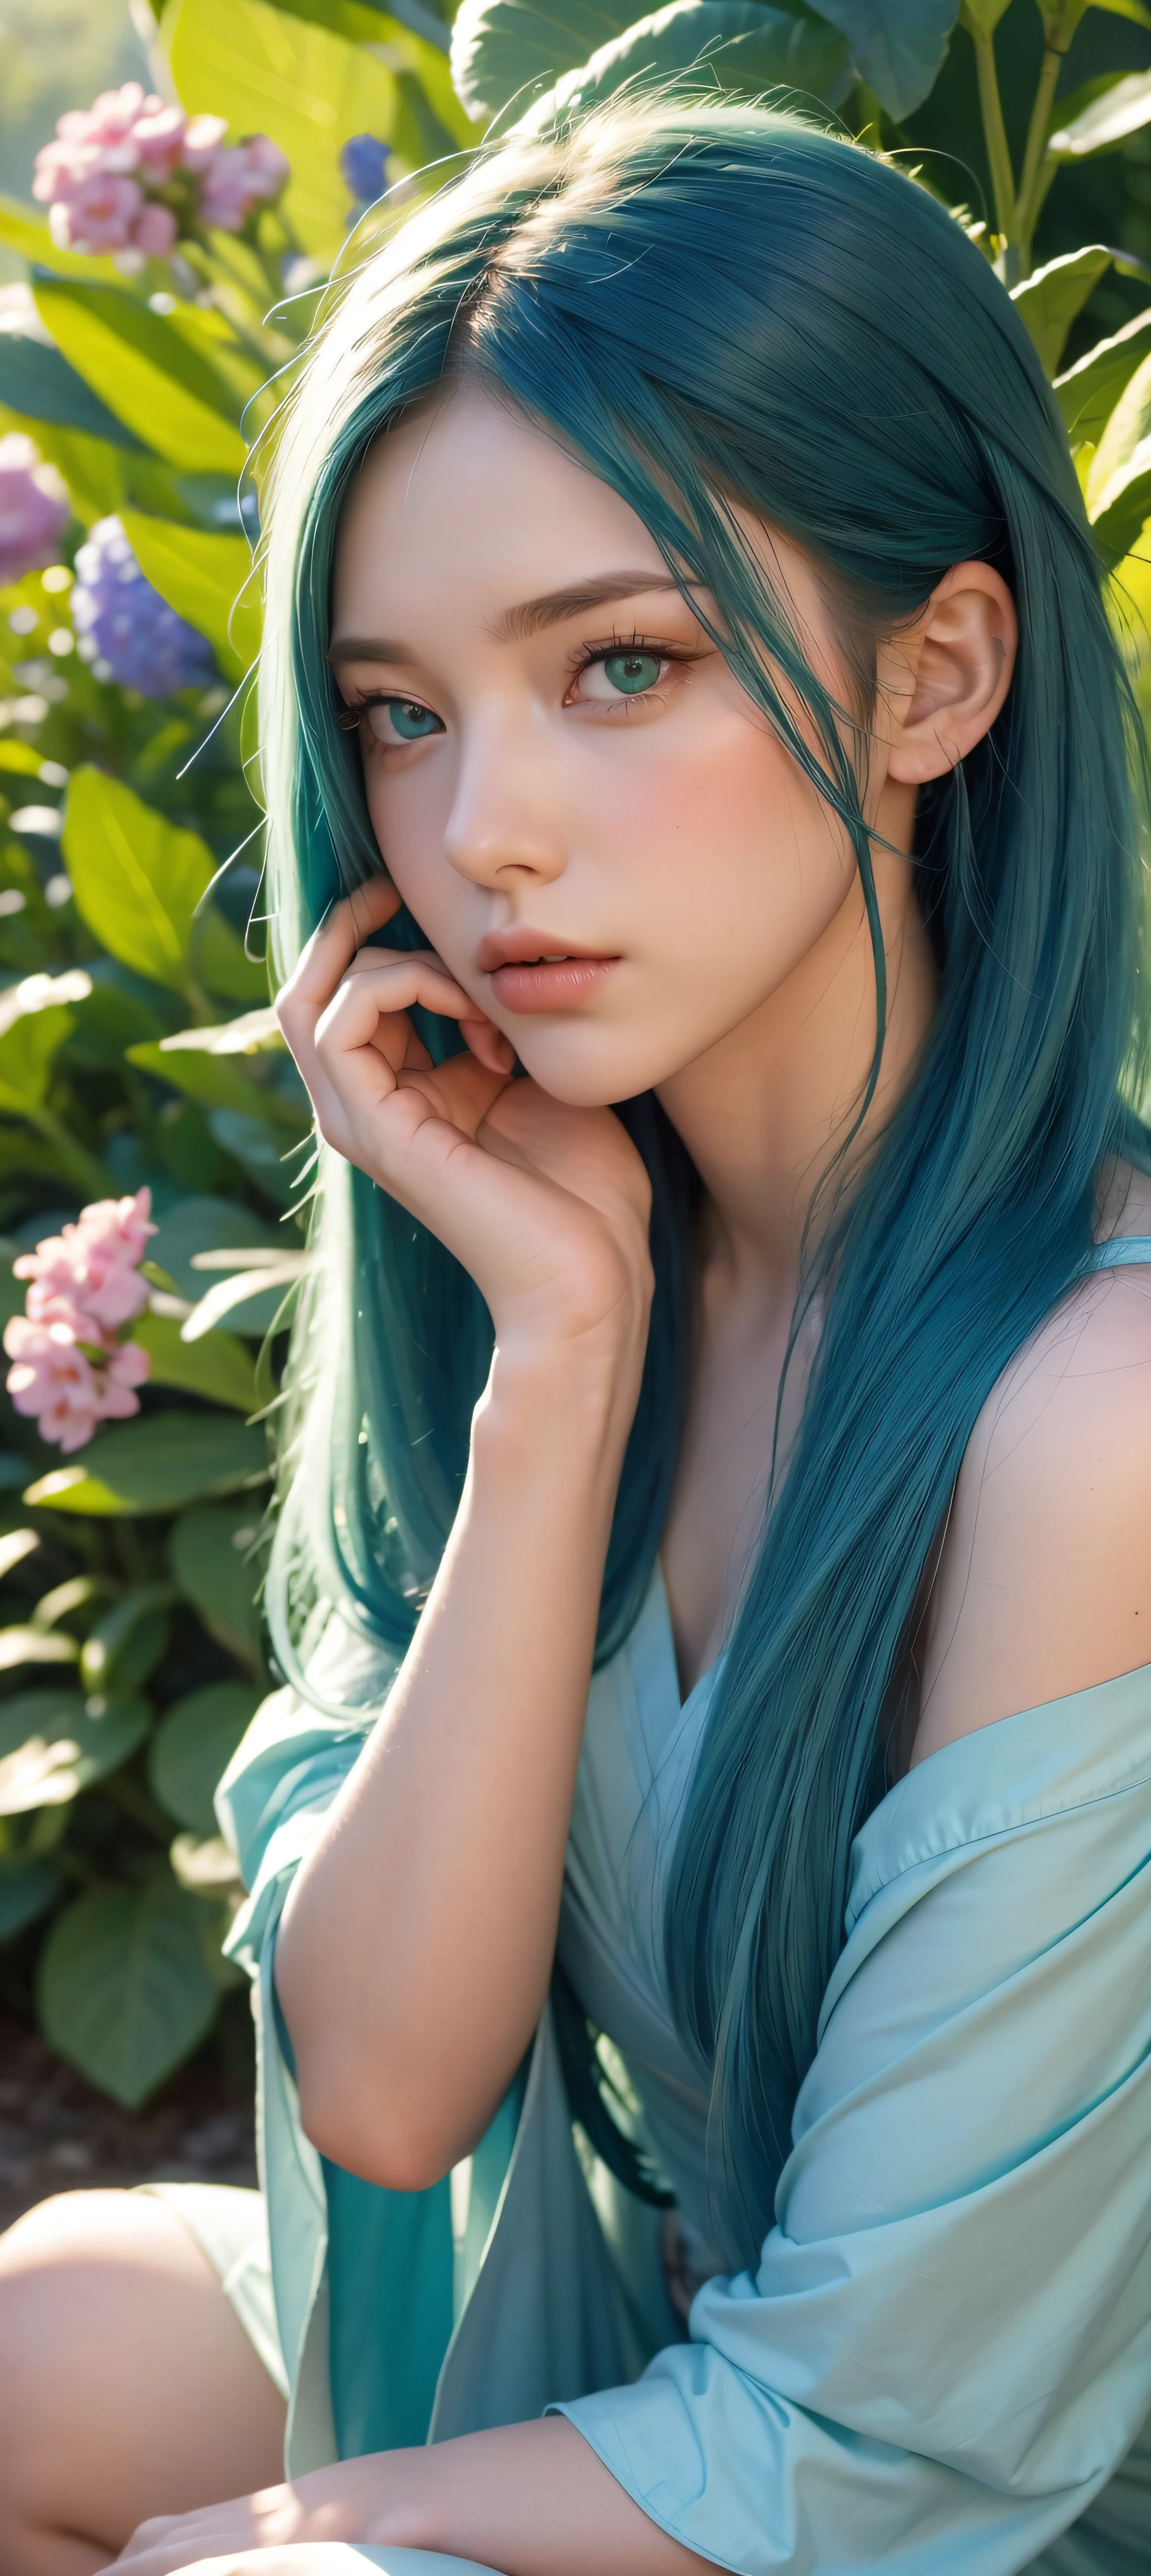 8k, 生, (傑作, 最高品質),緑の植物と花の畑に座っている長い青緑色の髪をした少女1人, 詳細な緑色の目, 彼女は顎の下に手を置いた, 温かみのある照明, 美しい赤いドレス, 美しい前景